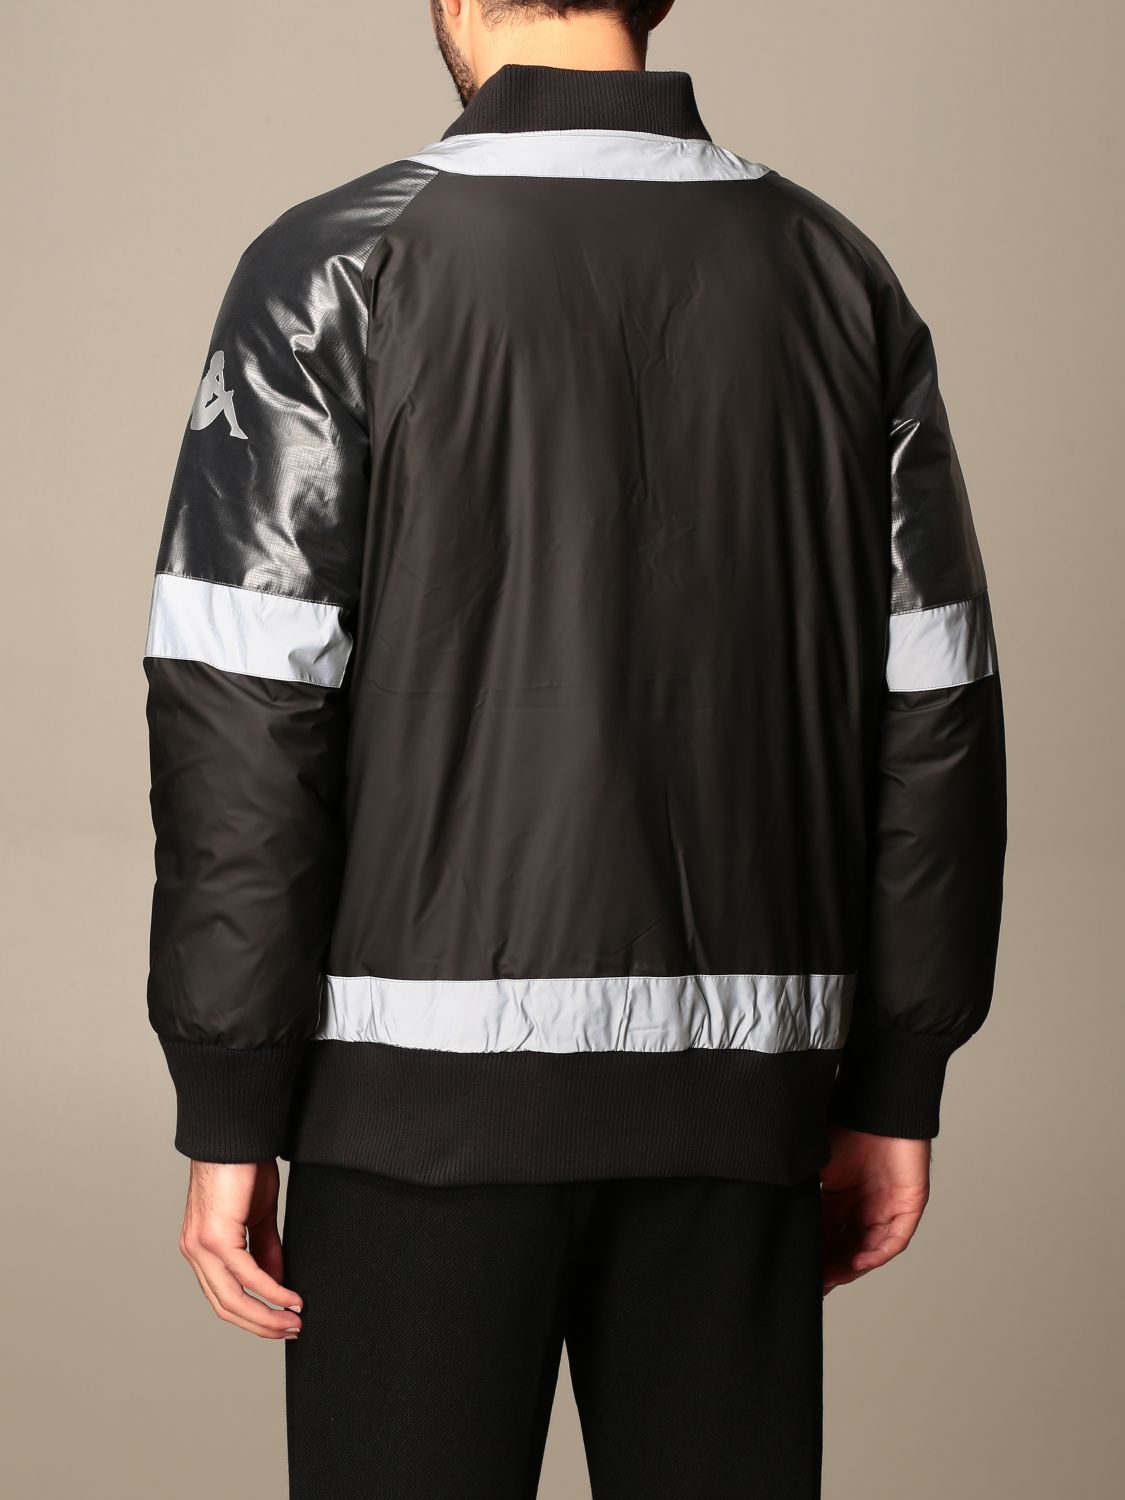 kappa reflective jacket